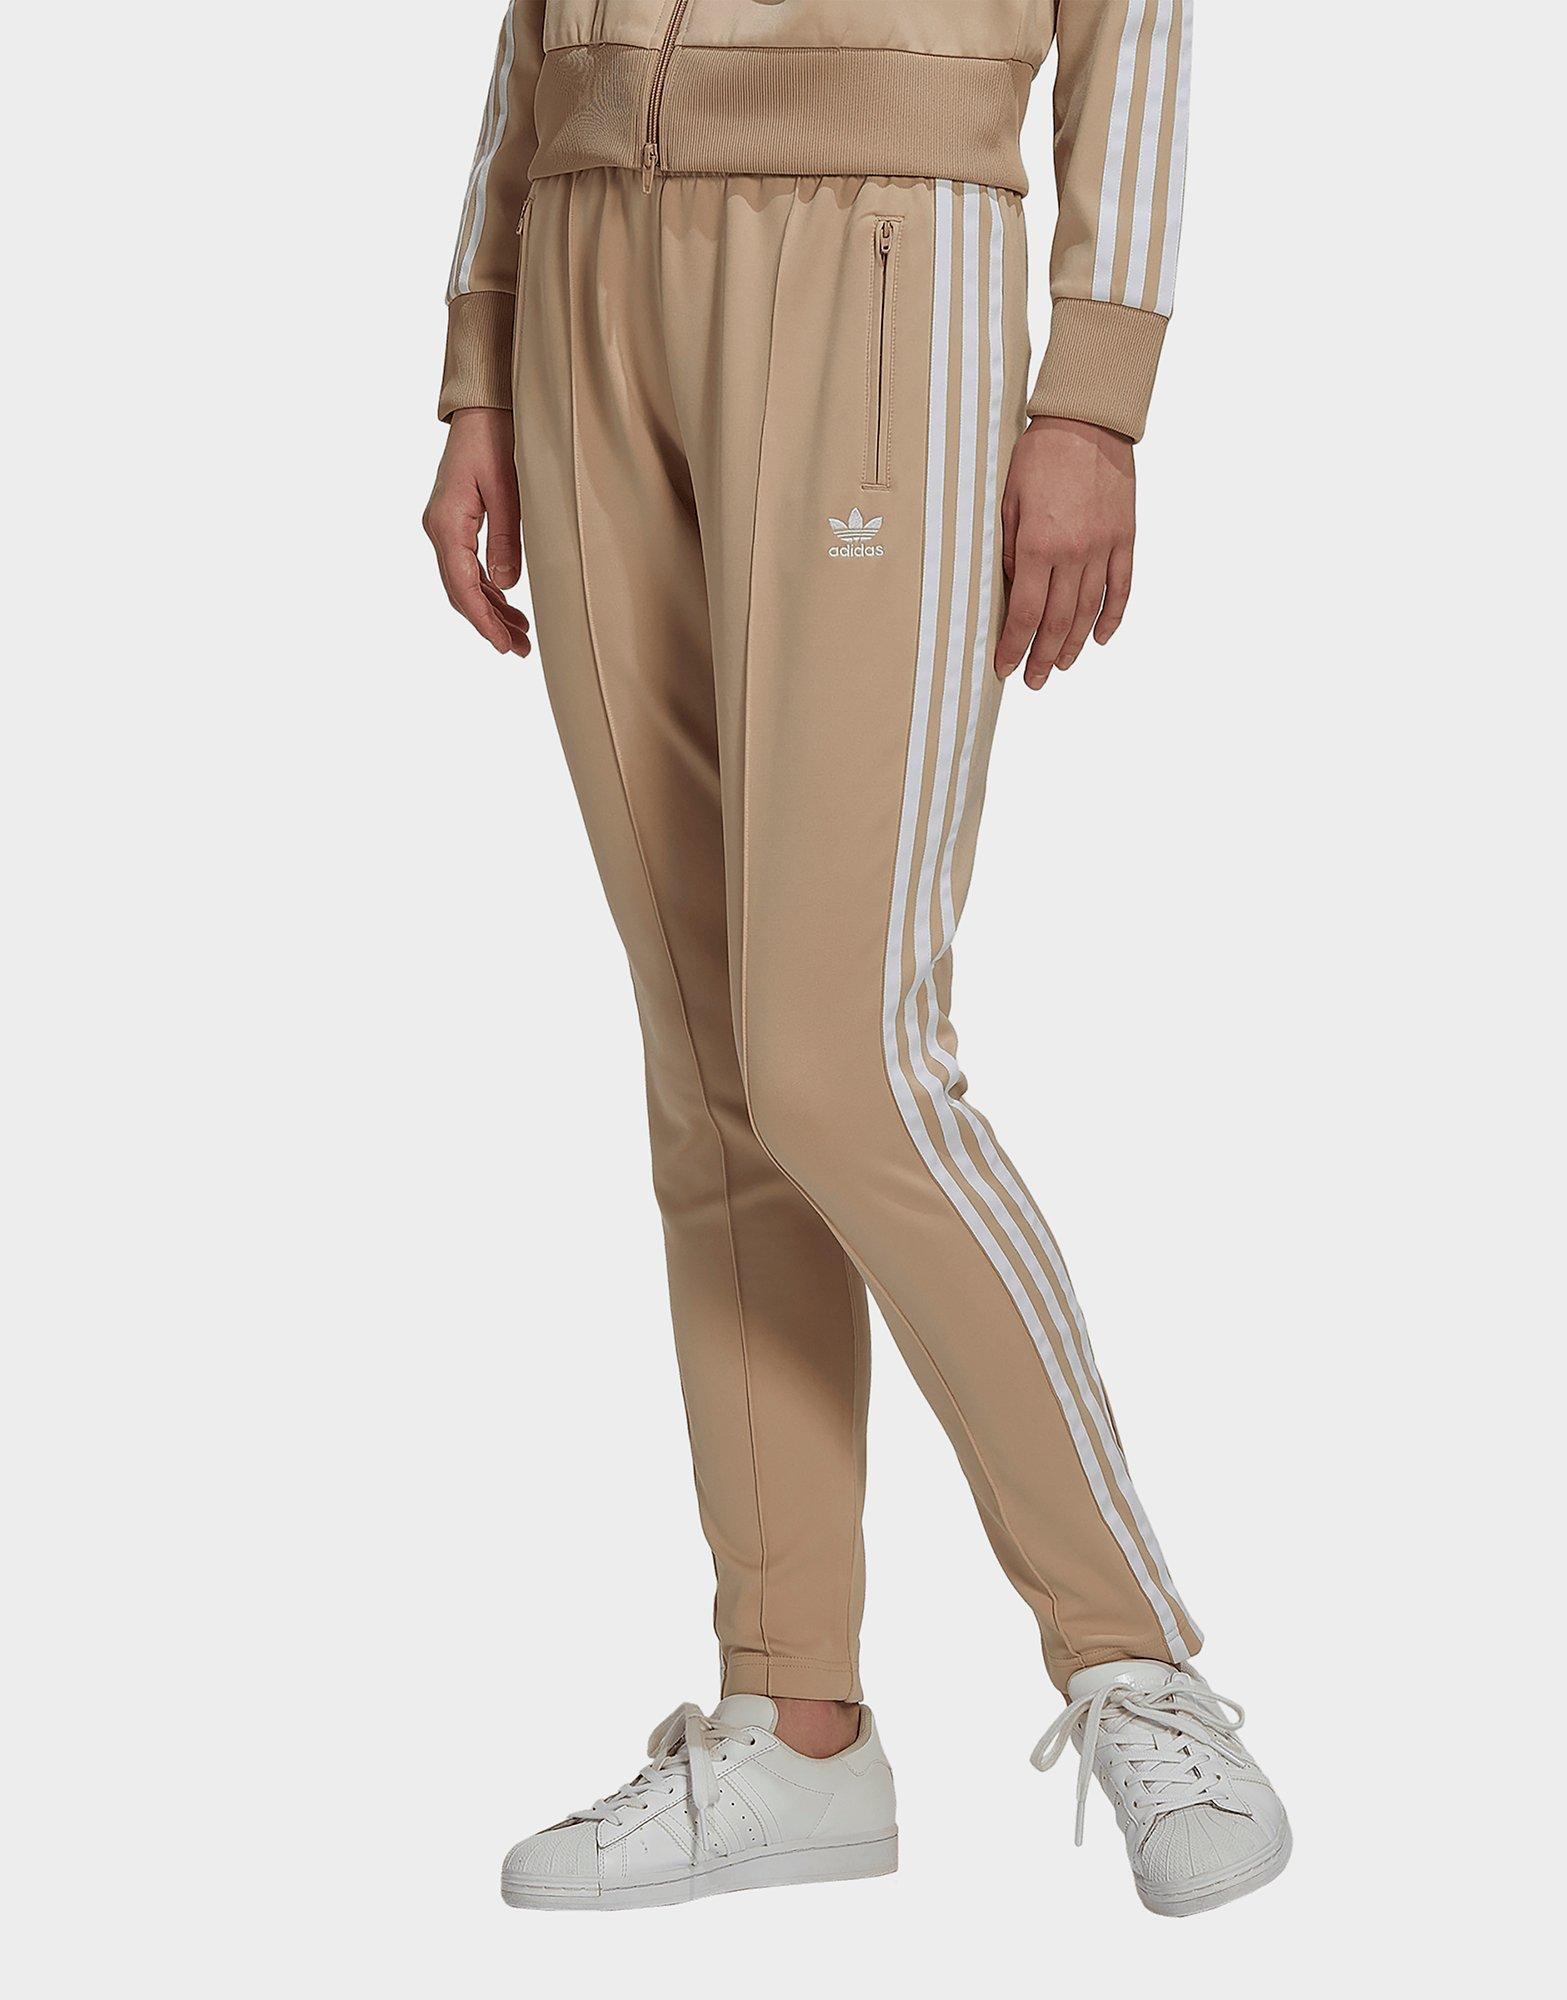 adidas Originals Primeblue SST Pants Brown